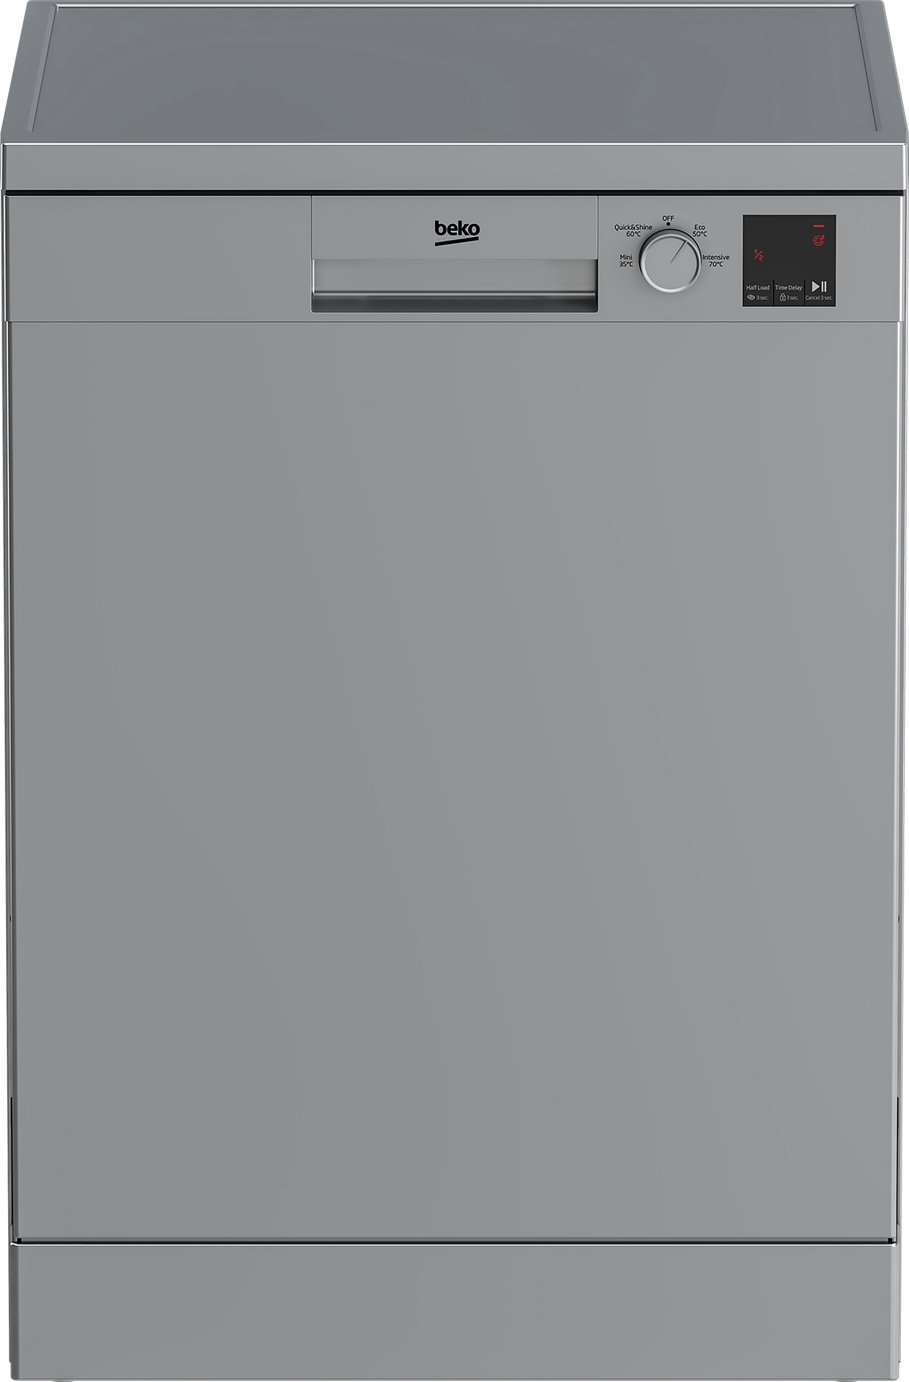 Beko DVN04320S Full Size Dishwasher Review